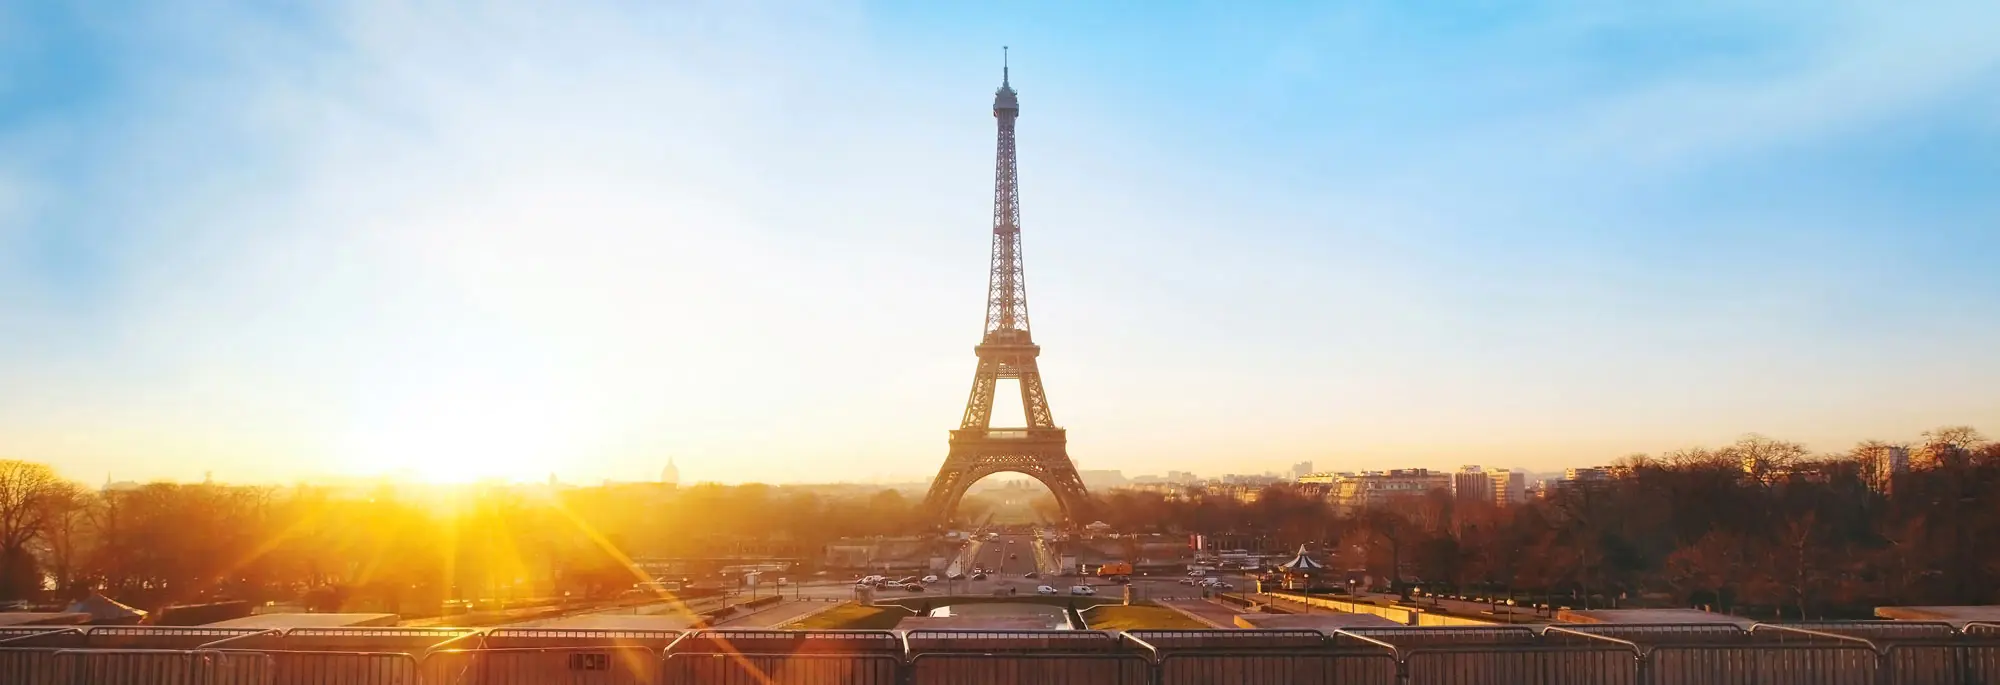 Vacanze studio Francia, corsi di Francese a Francia